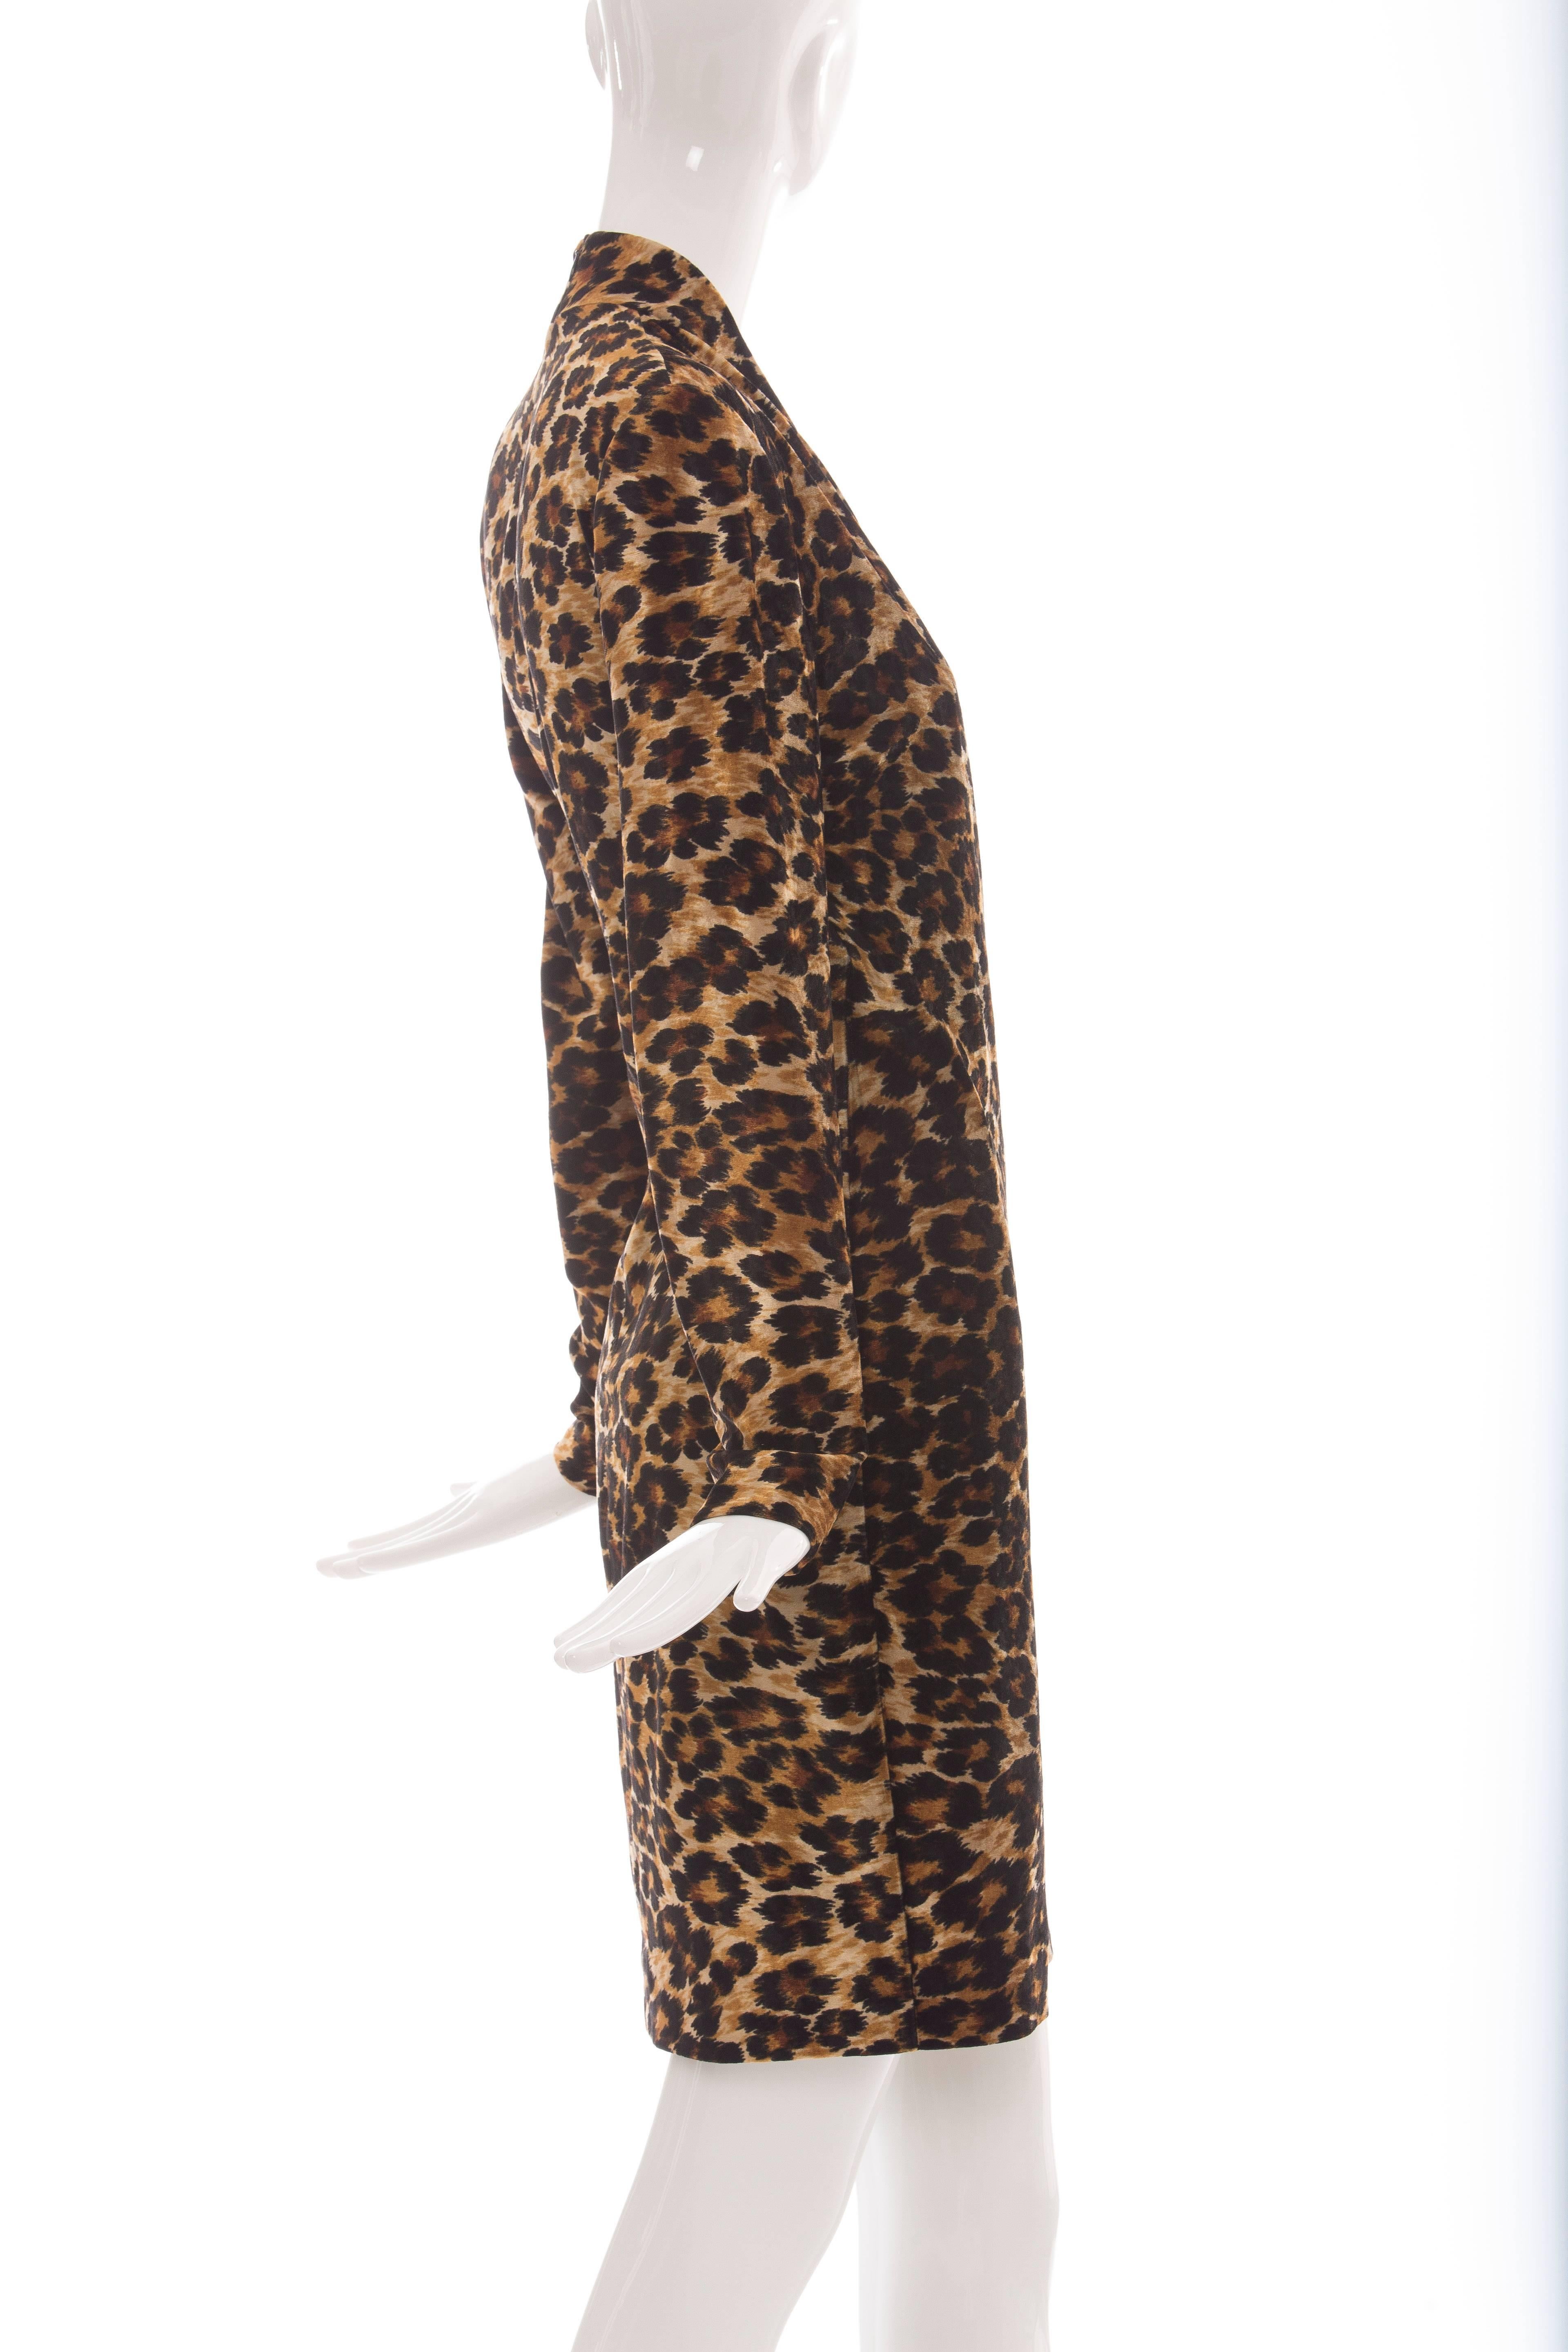 Patrick Kelly Stretch Velour Leopard Print Wrap Dress, Circa: 1980s 1